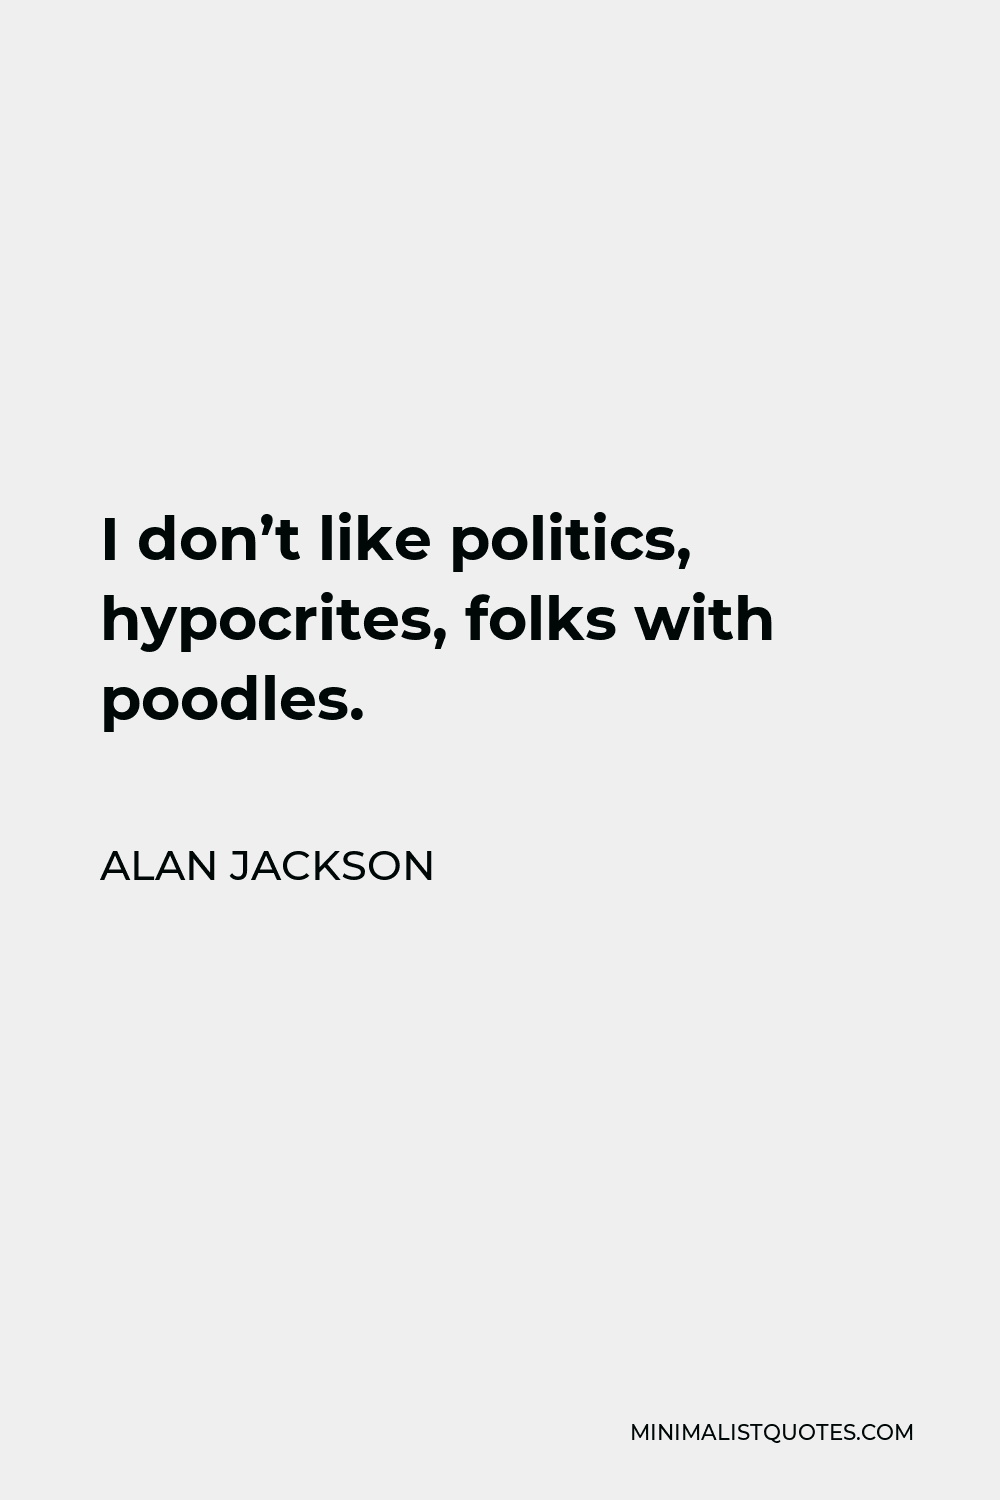 Alan Jackson Quote - I don’t like politics, hypocrites, folks with poodles.